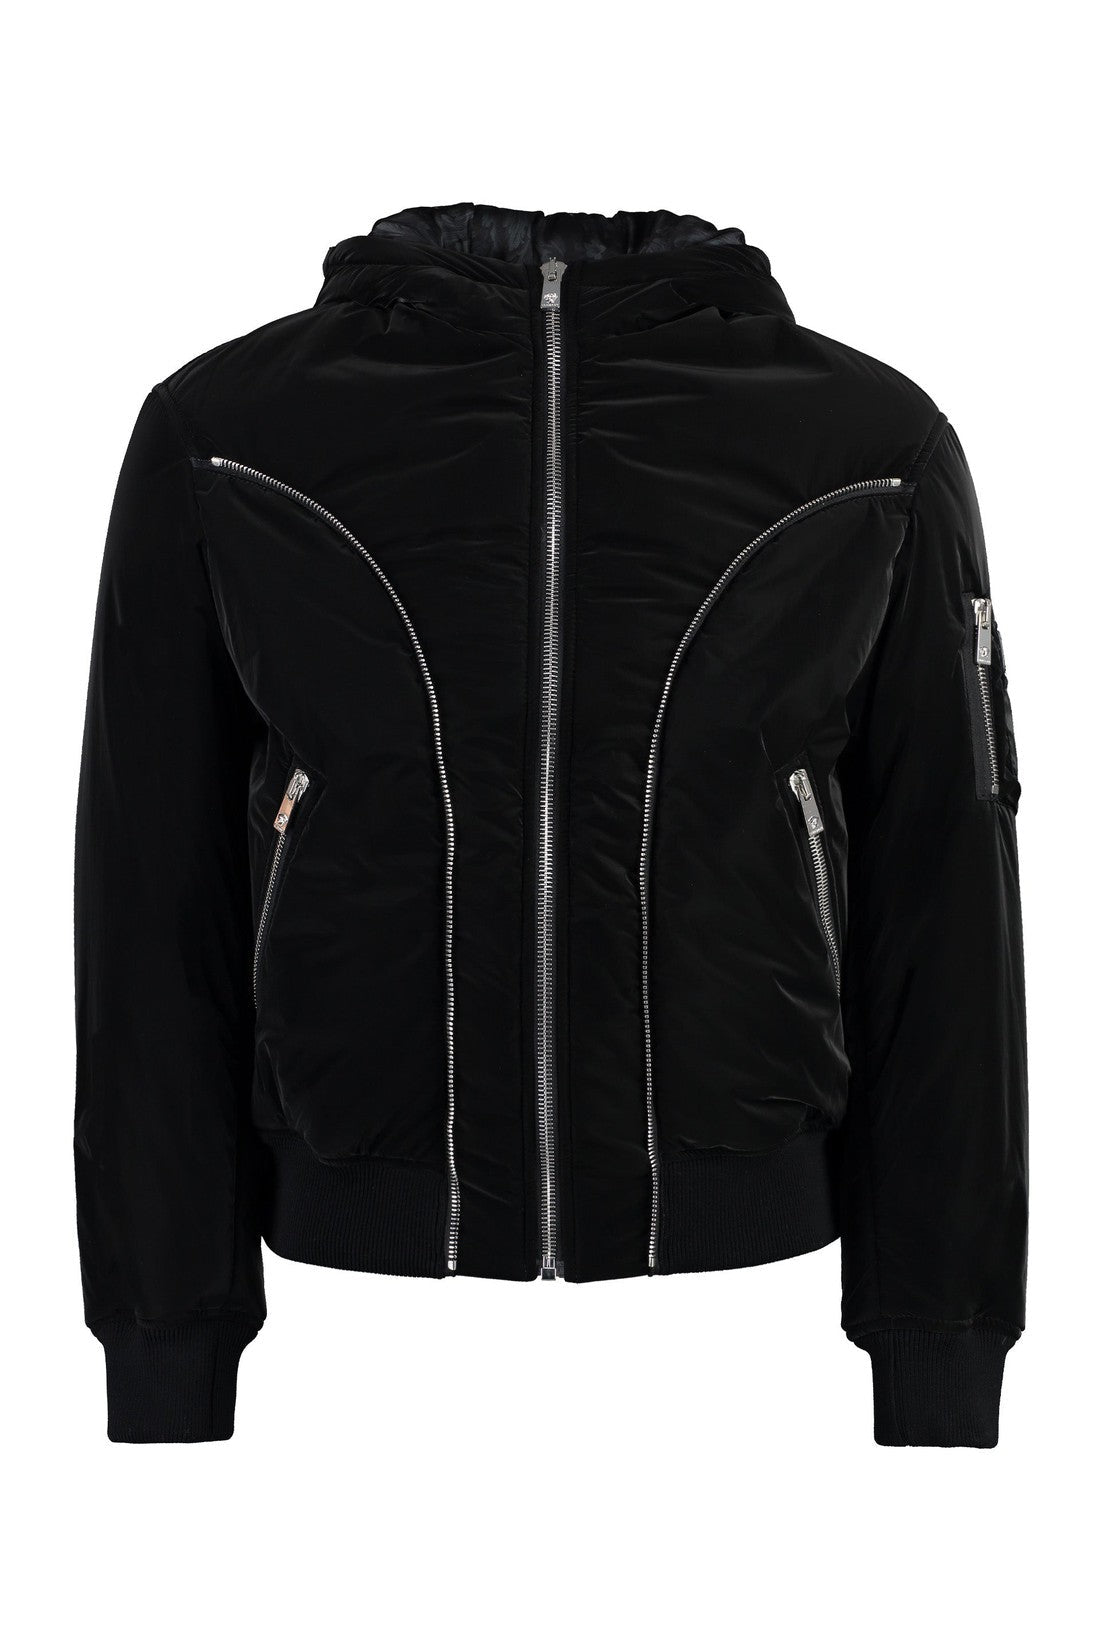 Versace-OUTLET-SALE-Hooded nylon jacket-ARCHIVIST